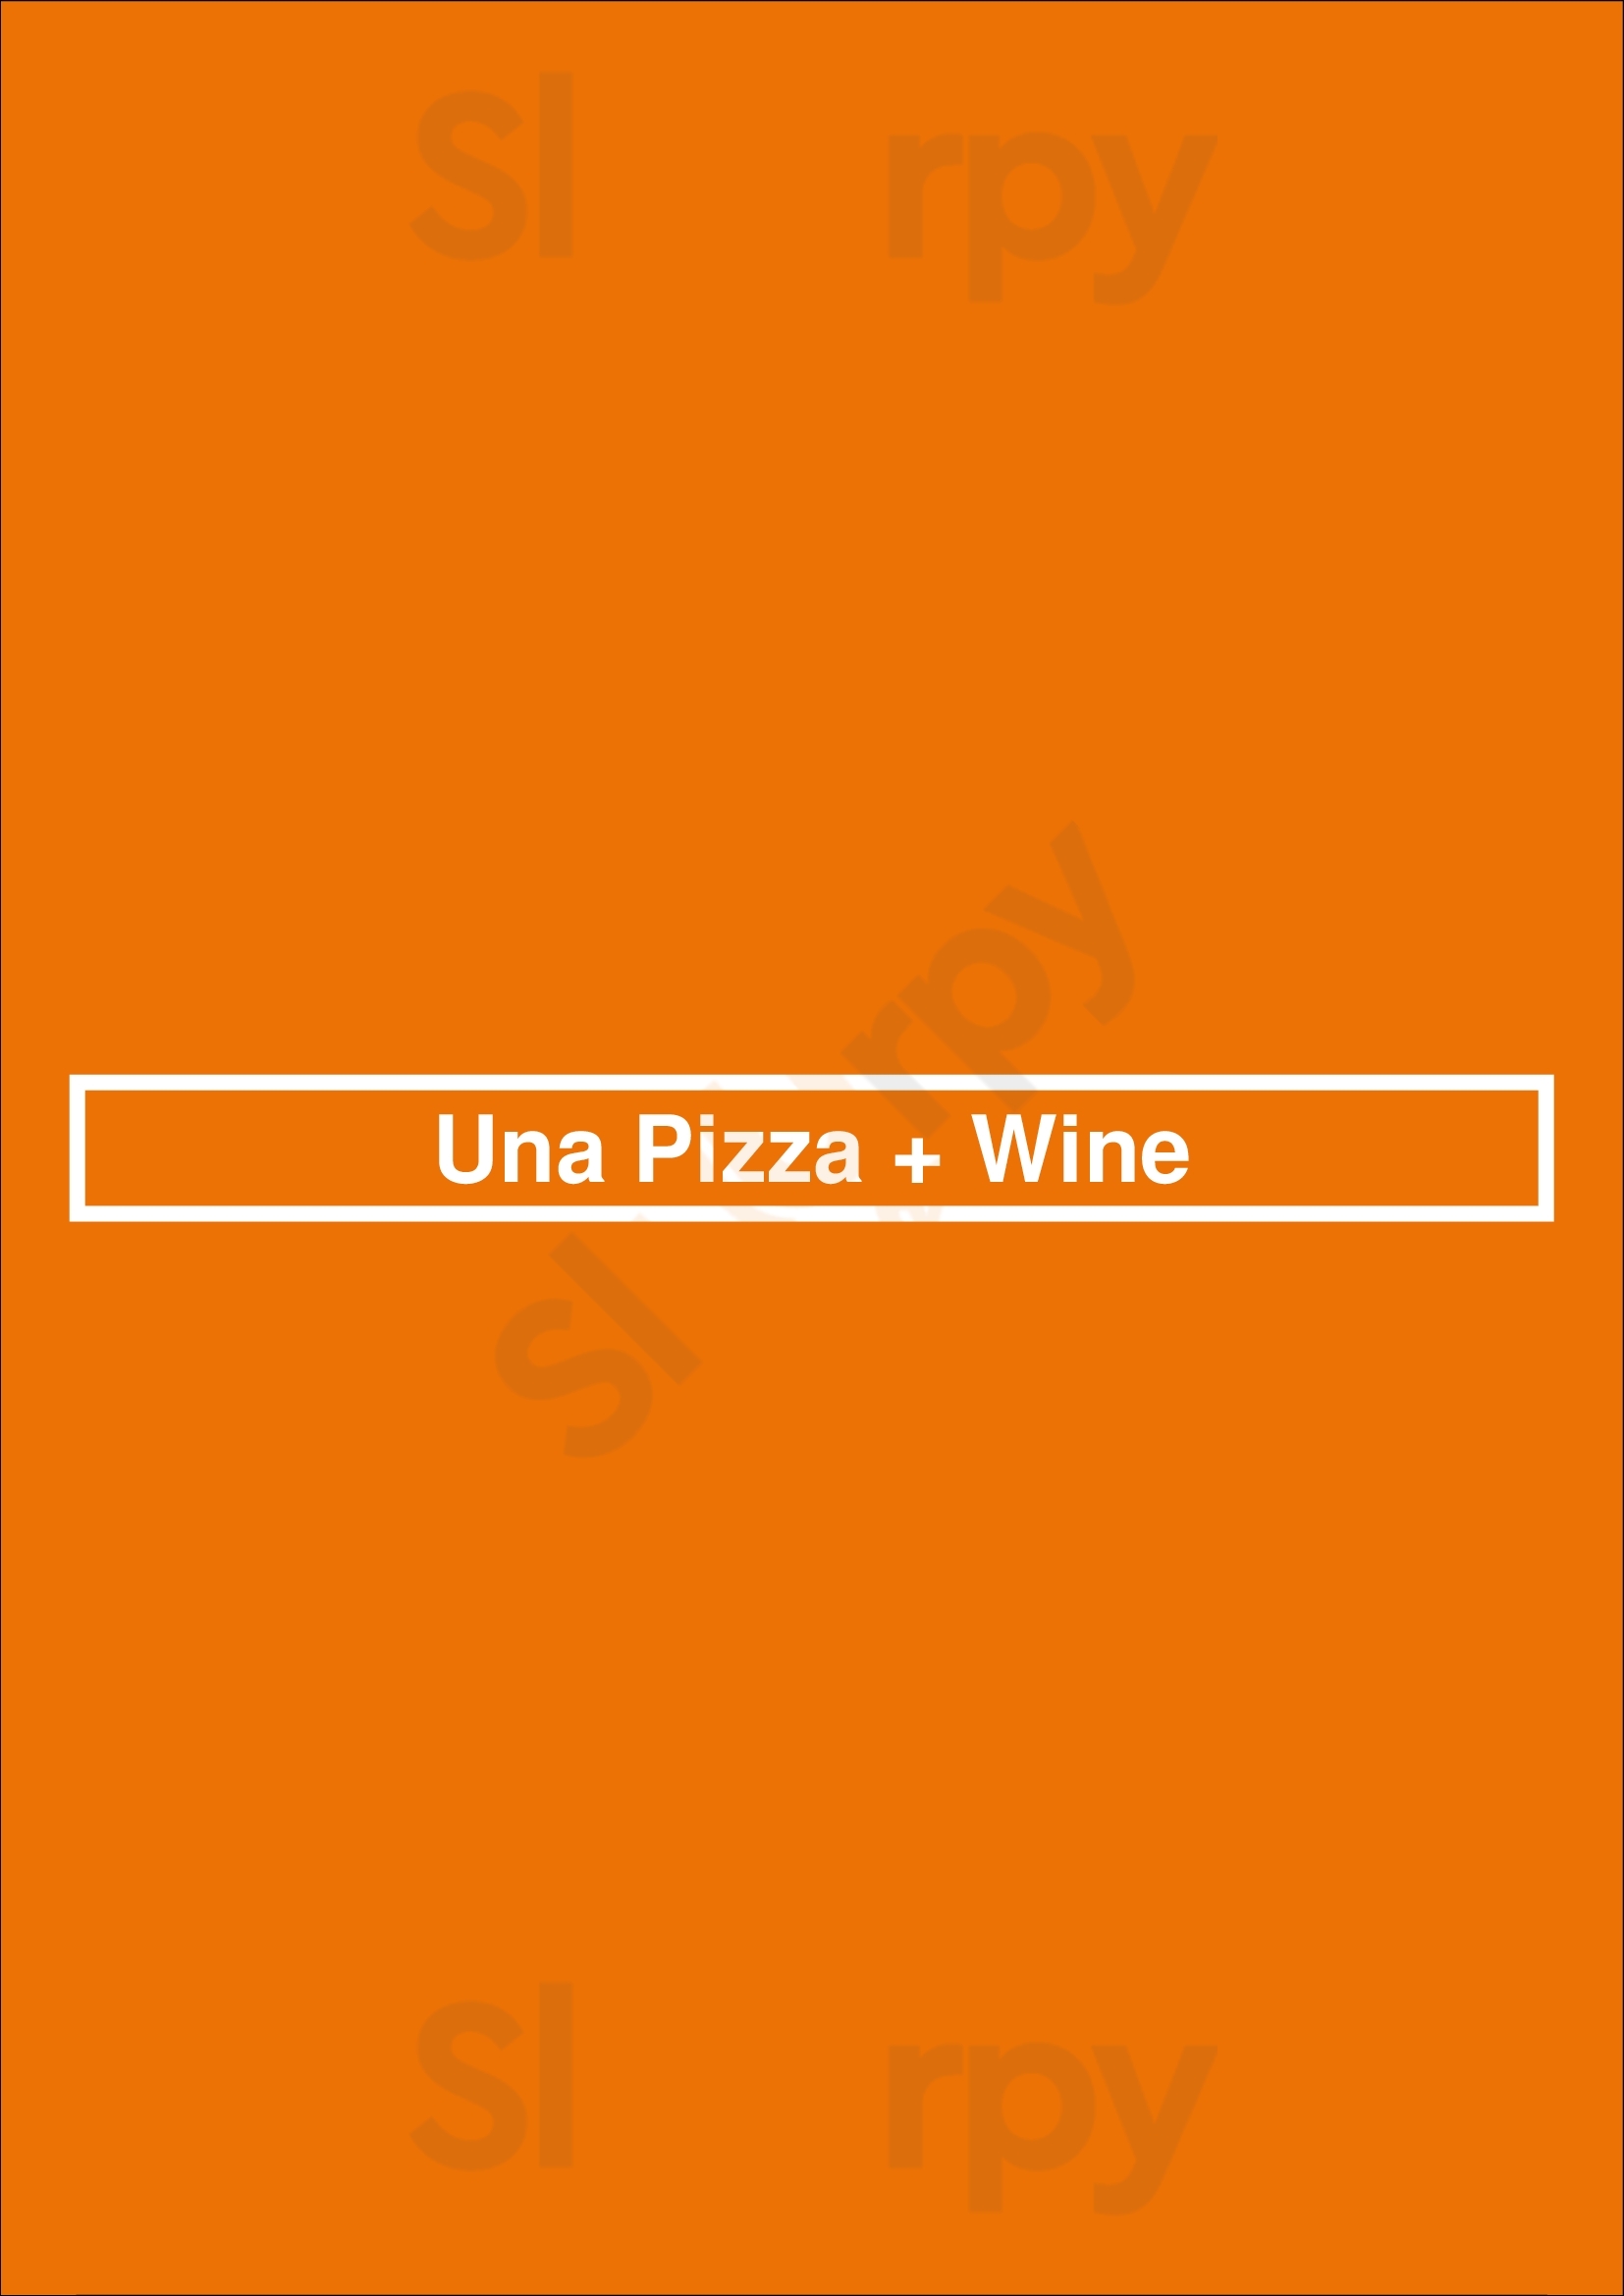 Una Pizza + Wine Saskatoon Menu - 1